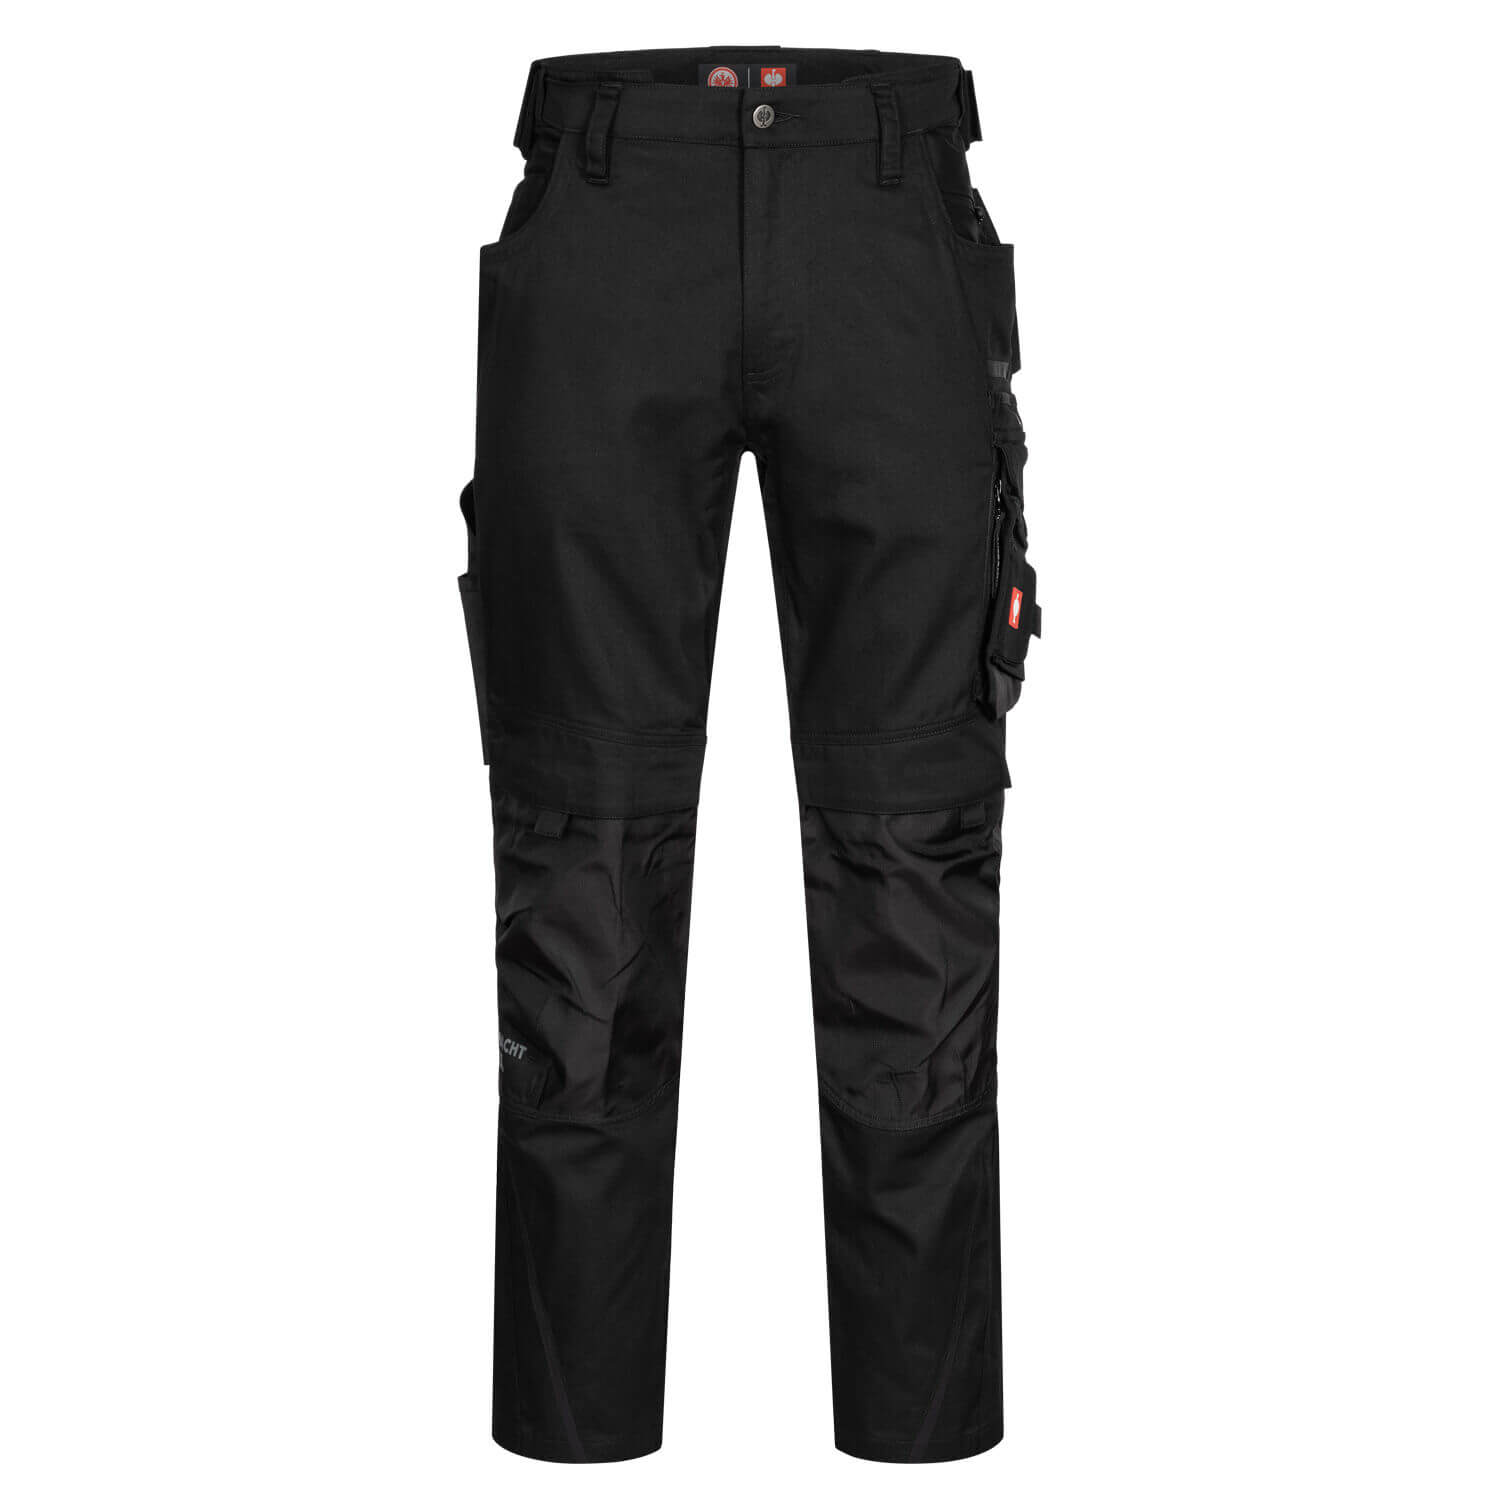 Bild 1: Workwear Pants Long Black